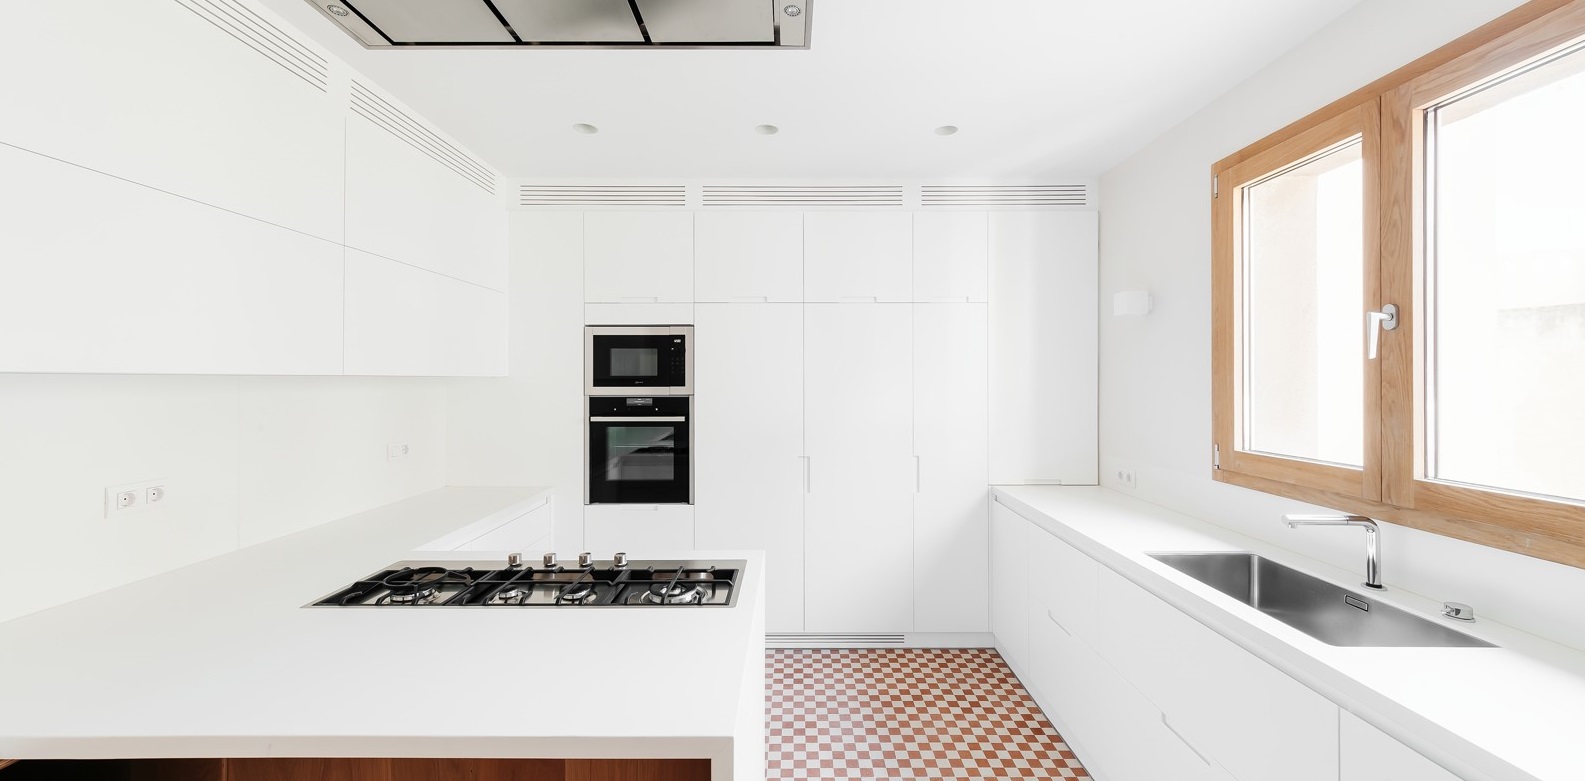 Cocinas blancas de diseño - Auró Kitchens